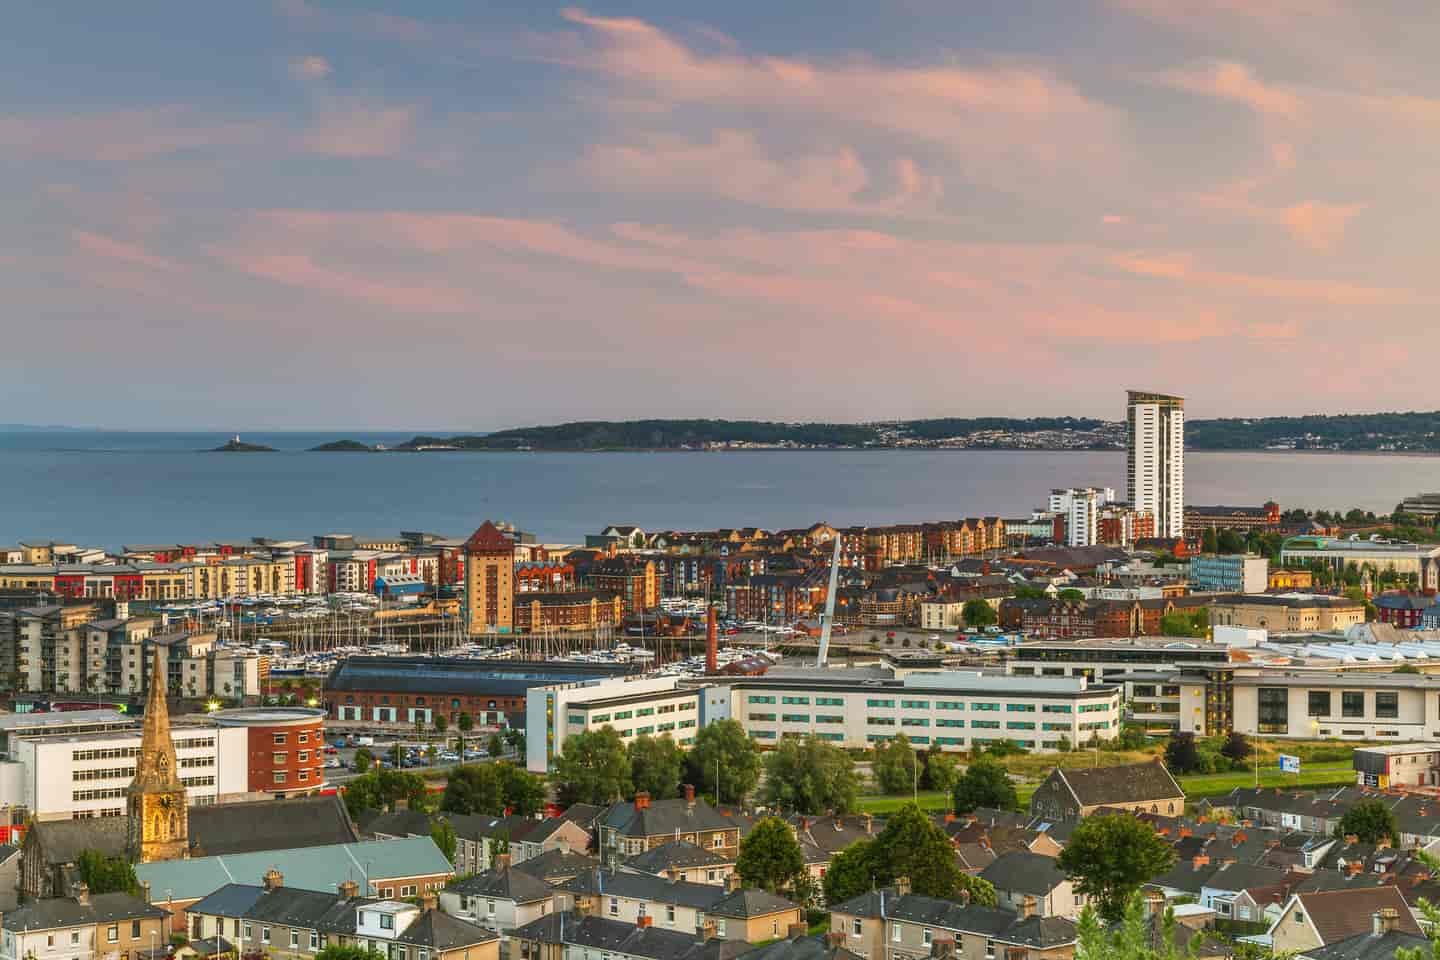 Student Accommodation in Swansea - Swansea city skyline and marina